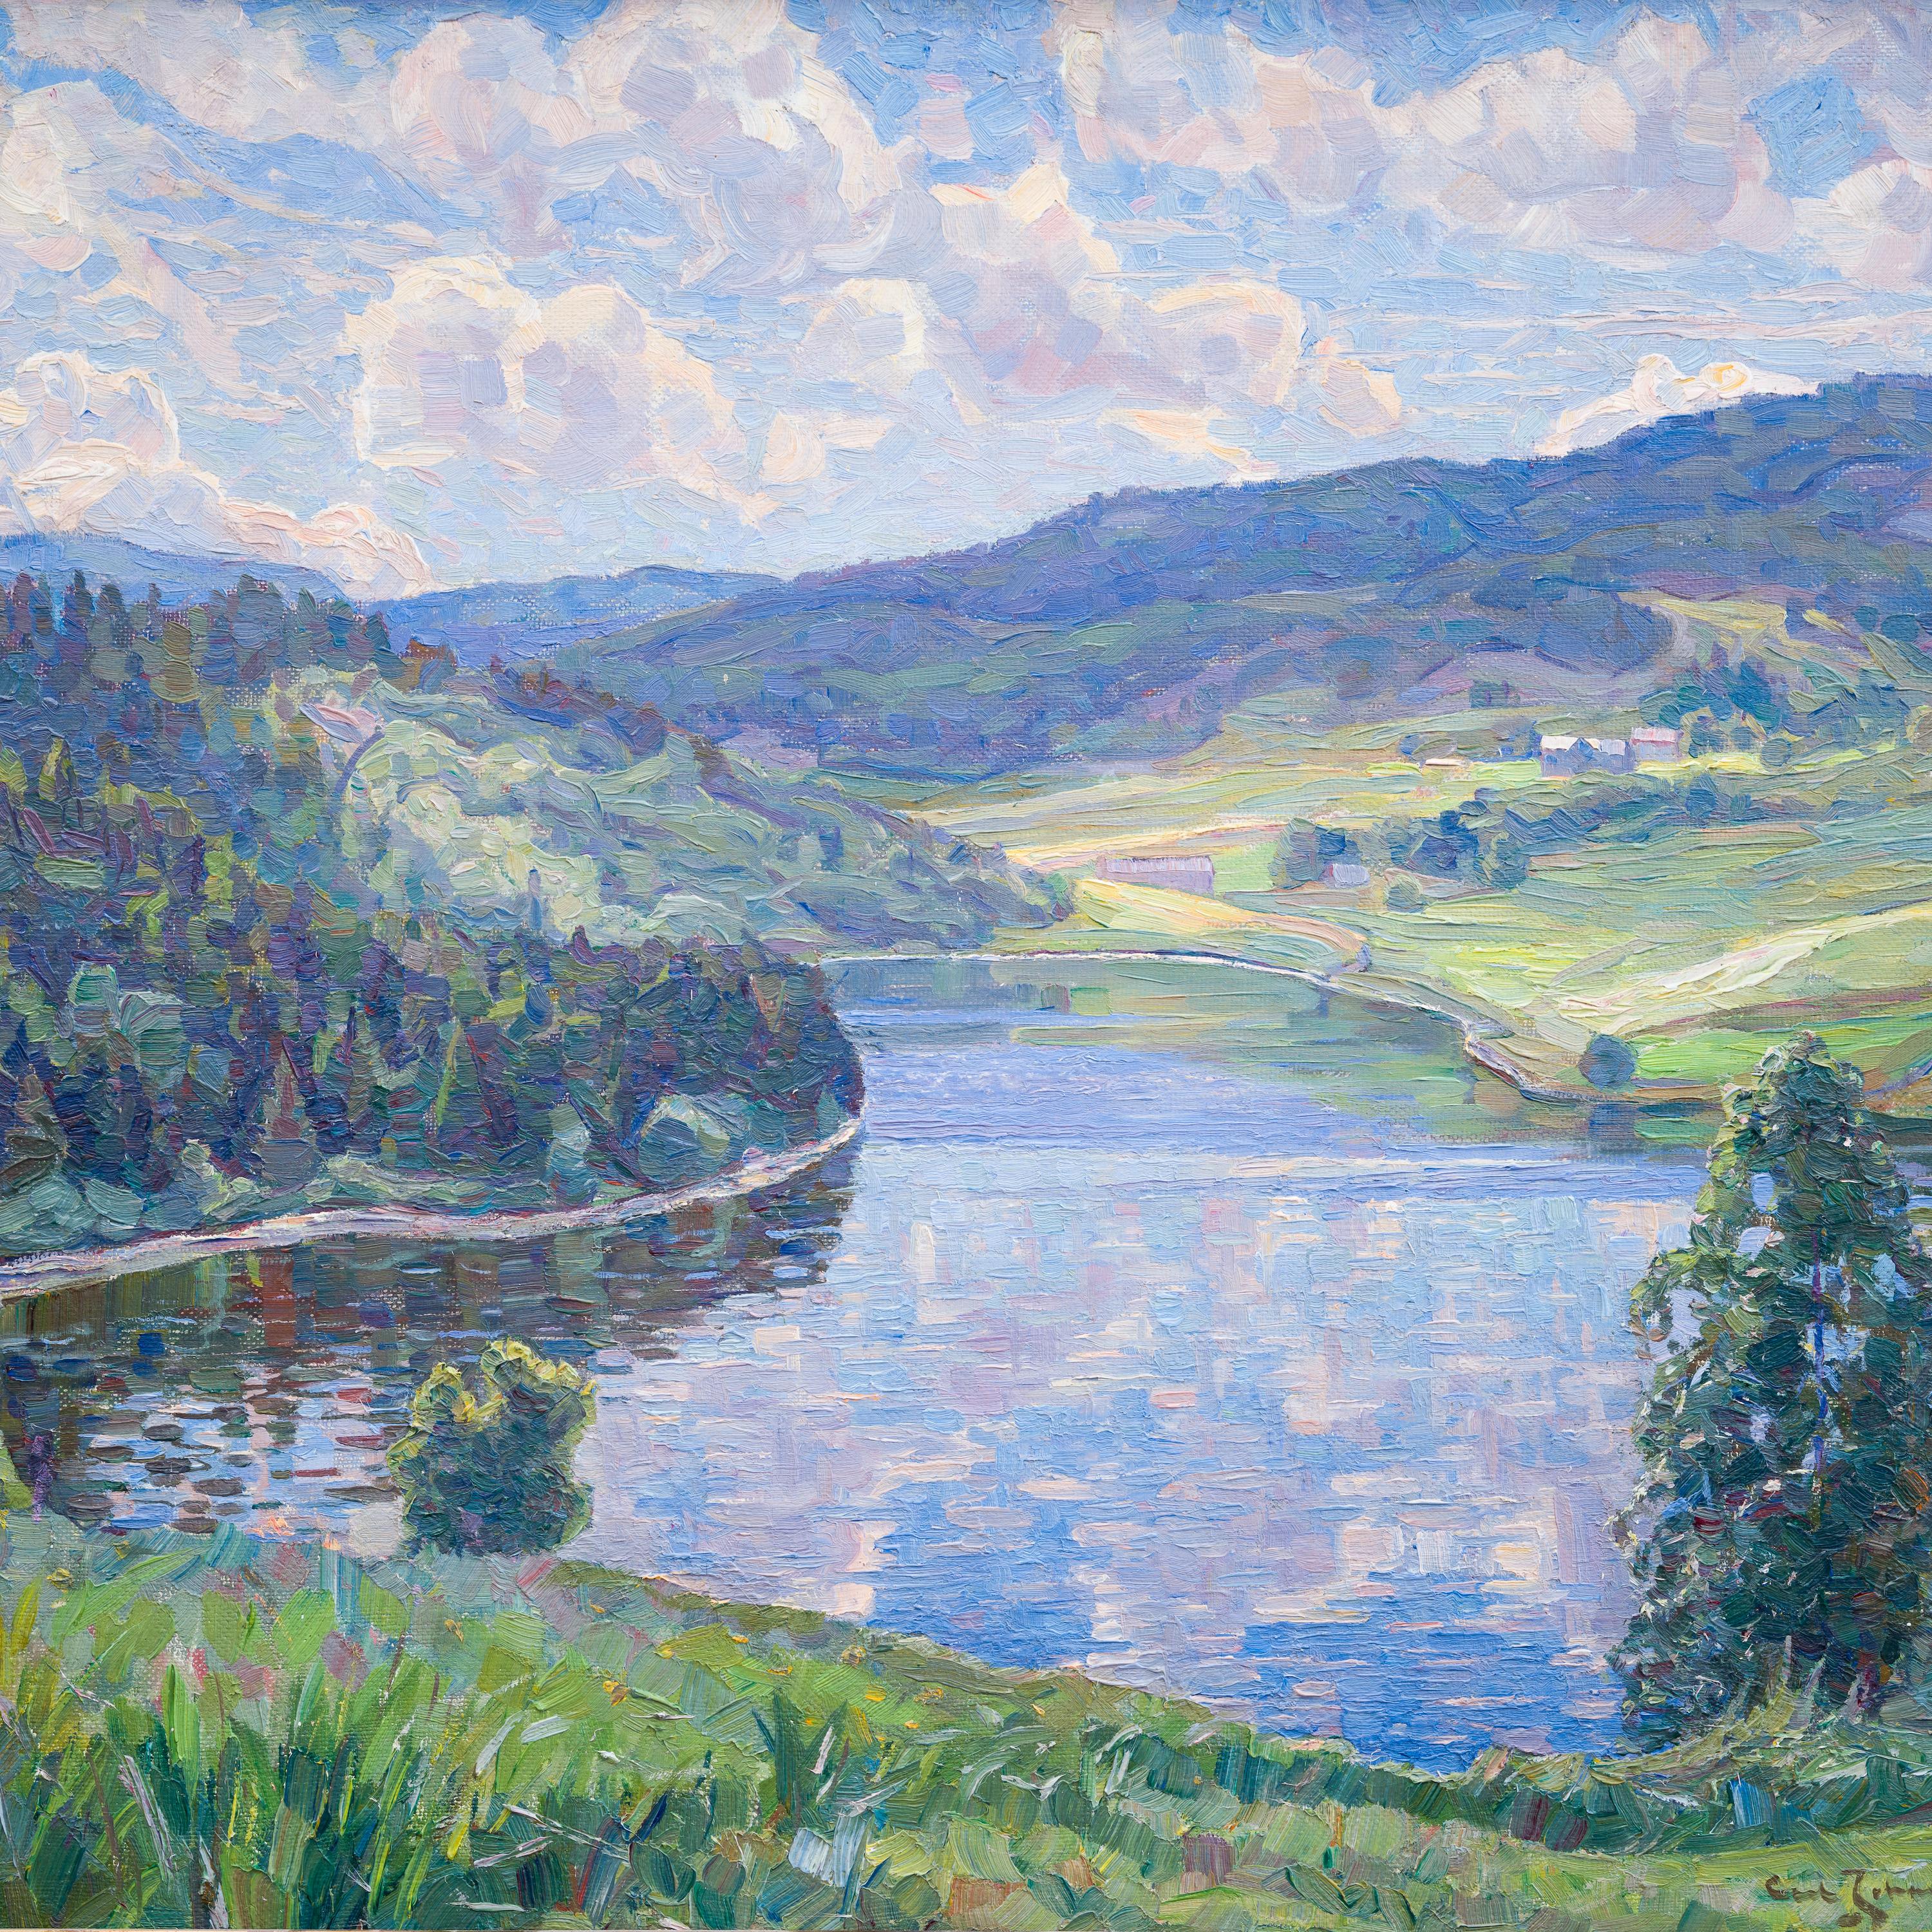 Landscape from Nordingrå, 1935 by Ultramarine Johansson - Post-Impressionist Painting by Carl Johansson 